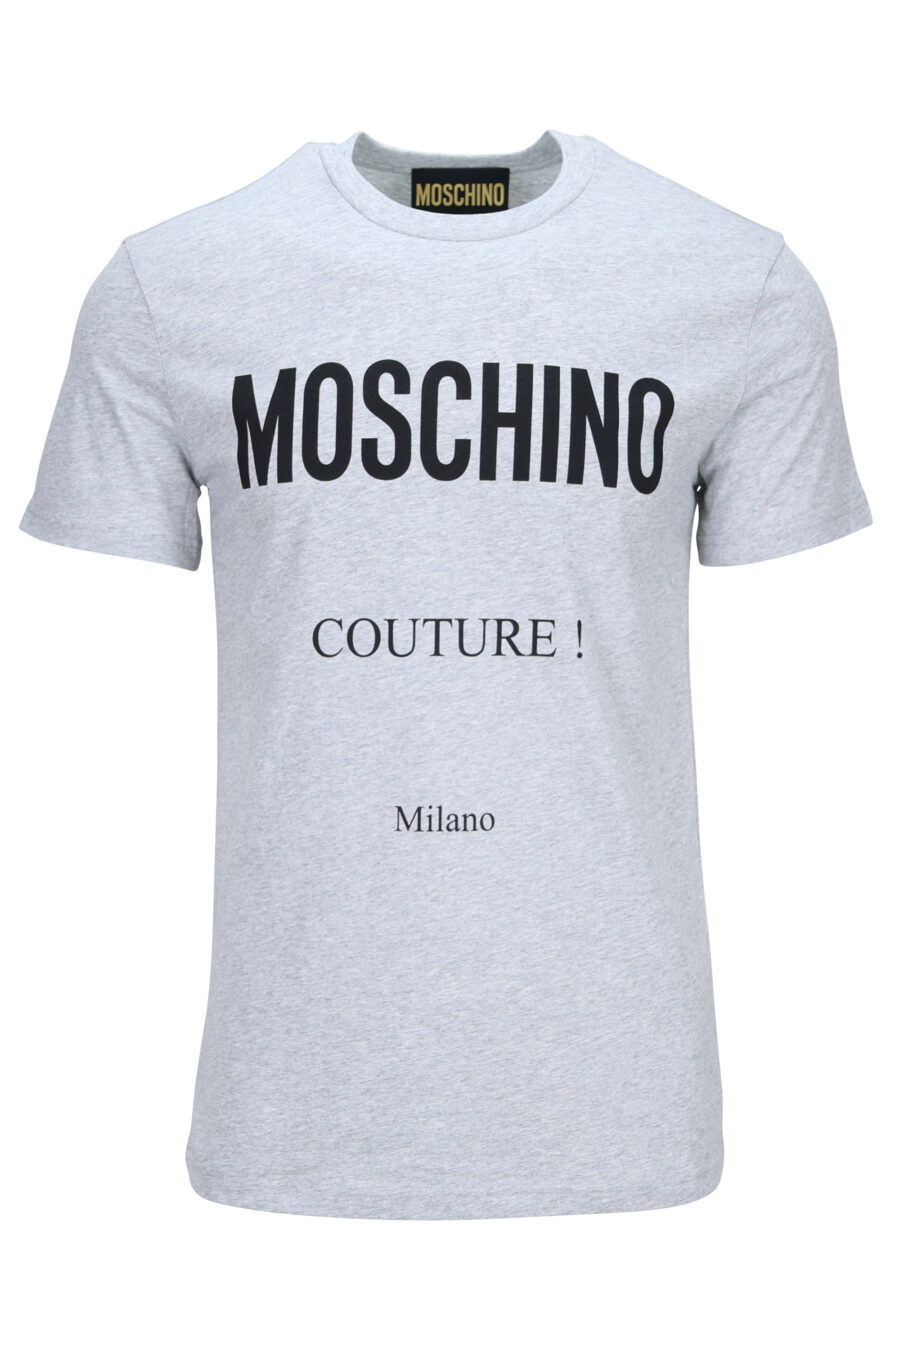 Camiseta gris con maxilogo "couture milano" - 889316936414